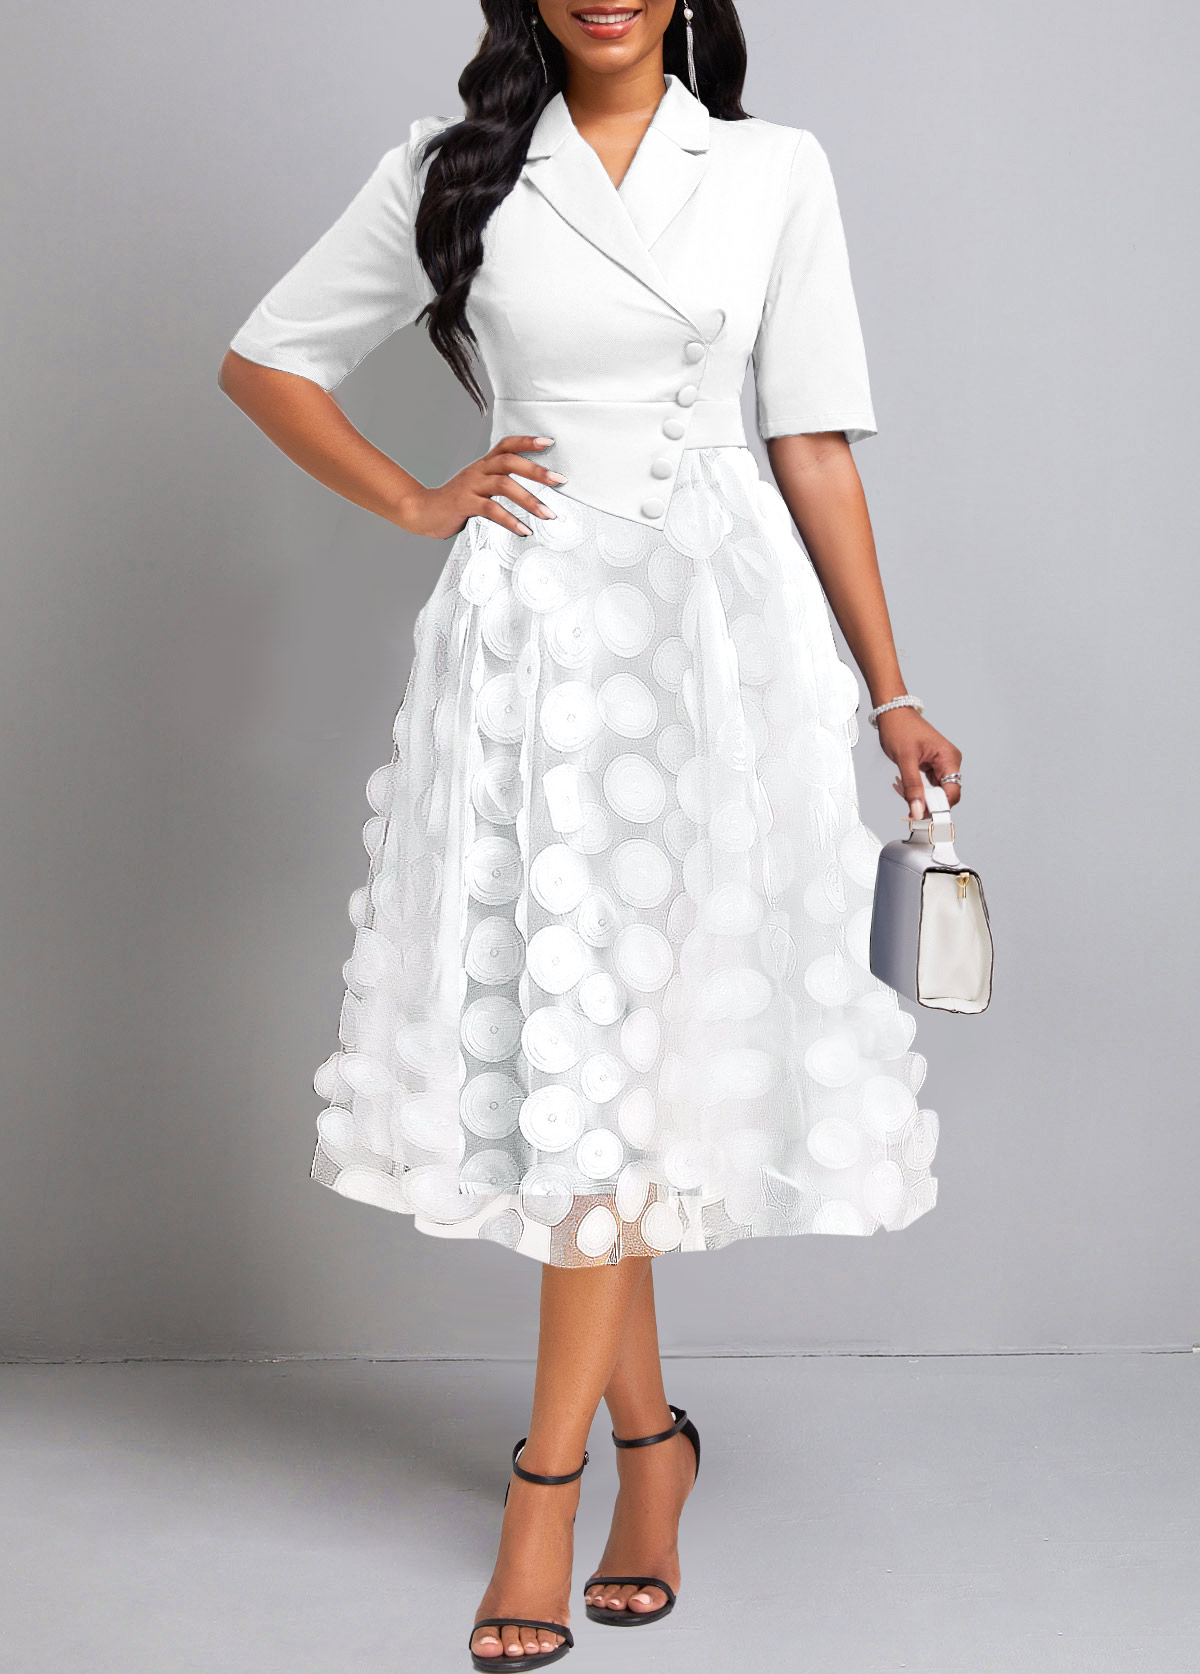 Raw White Burn Out Printing Short Sleeve Lapel Dress